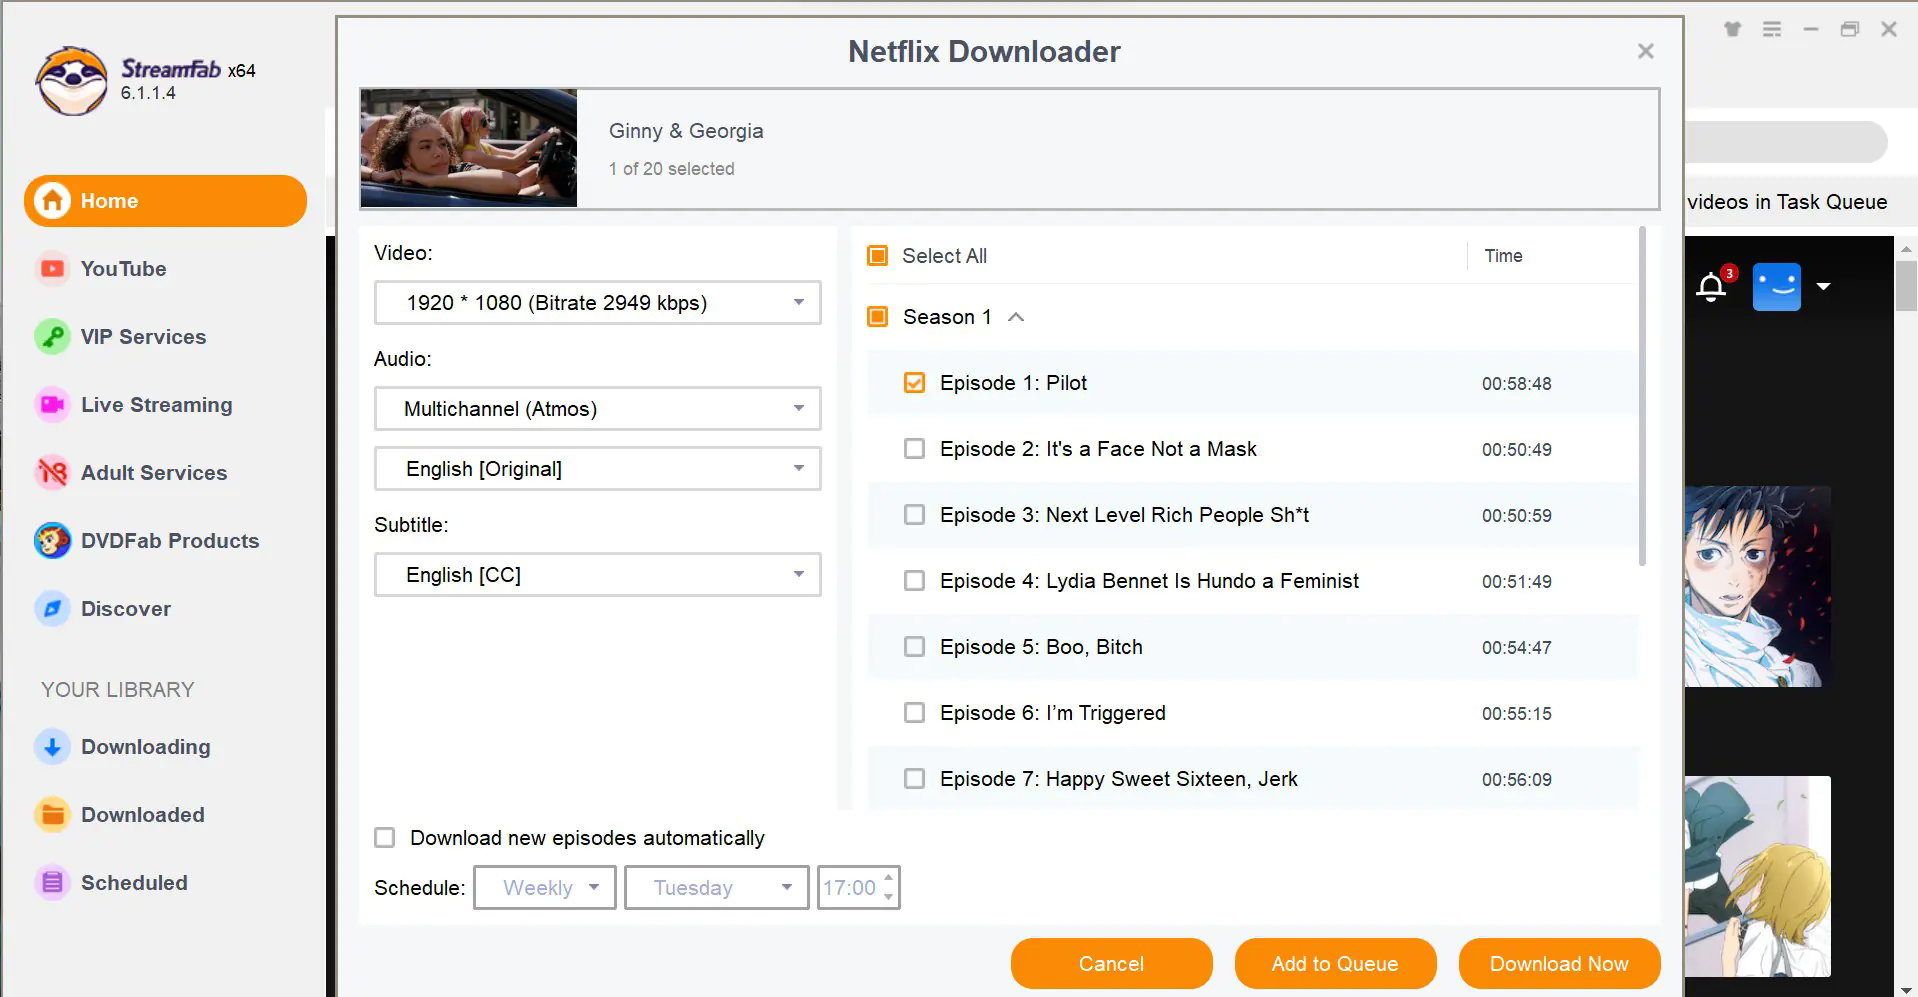 Set output options for Netflix episodes